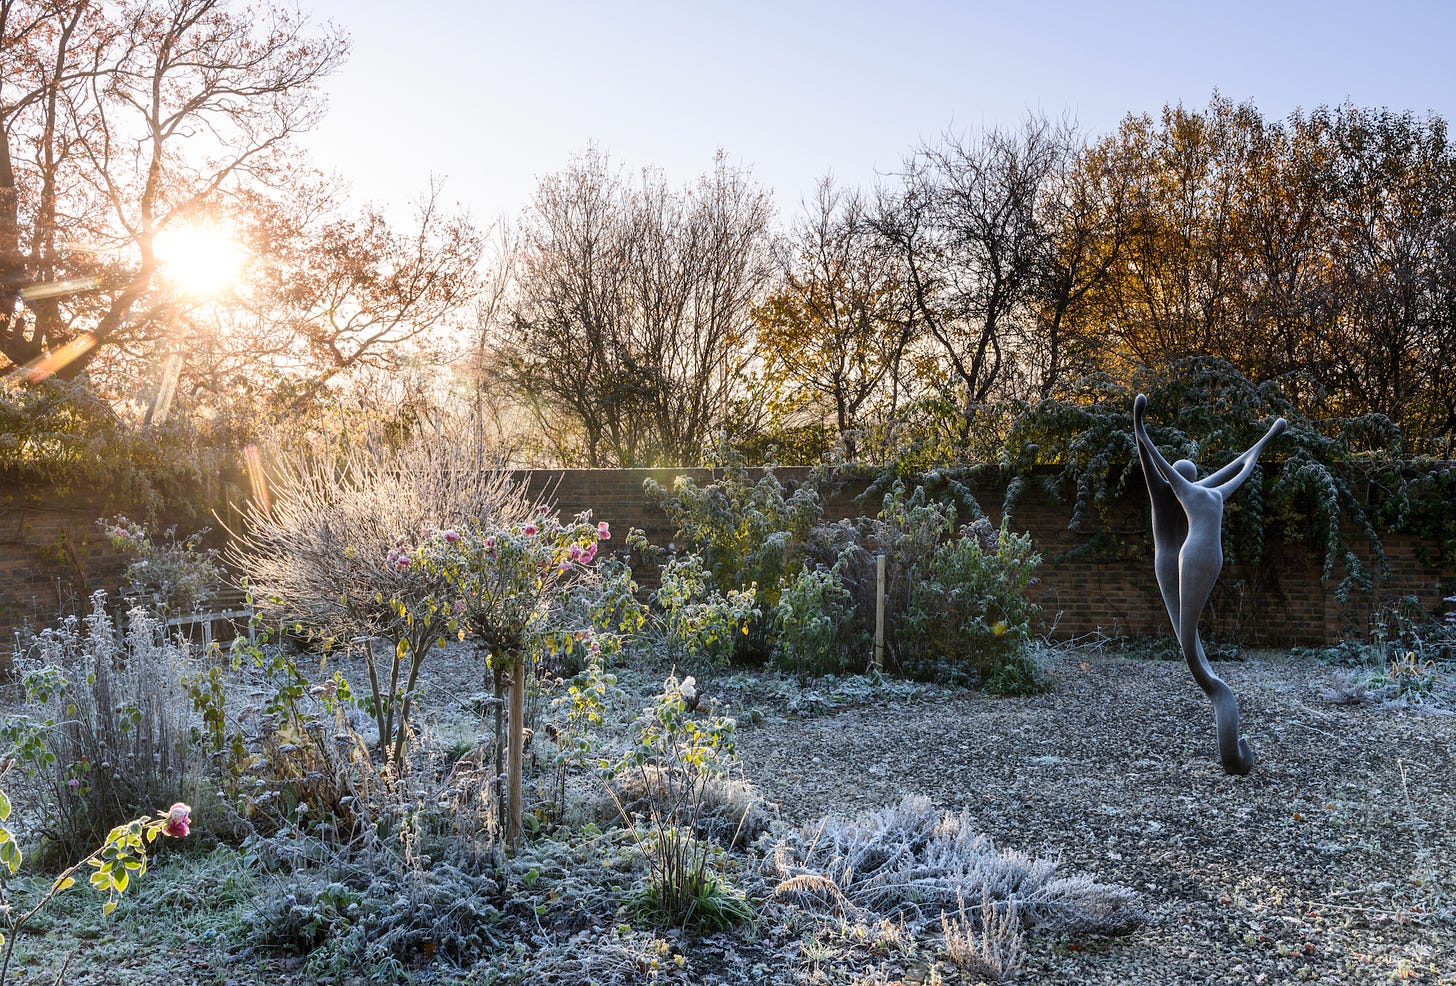 Frosty walled garden at sunrise, with figurative garden sculpture